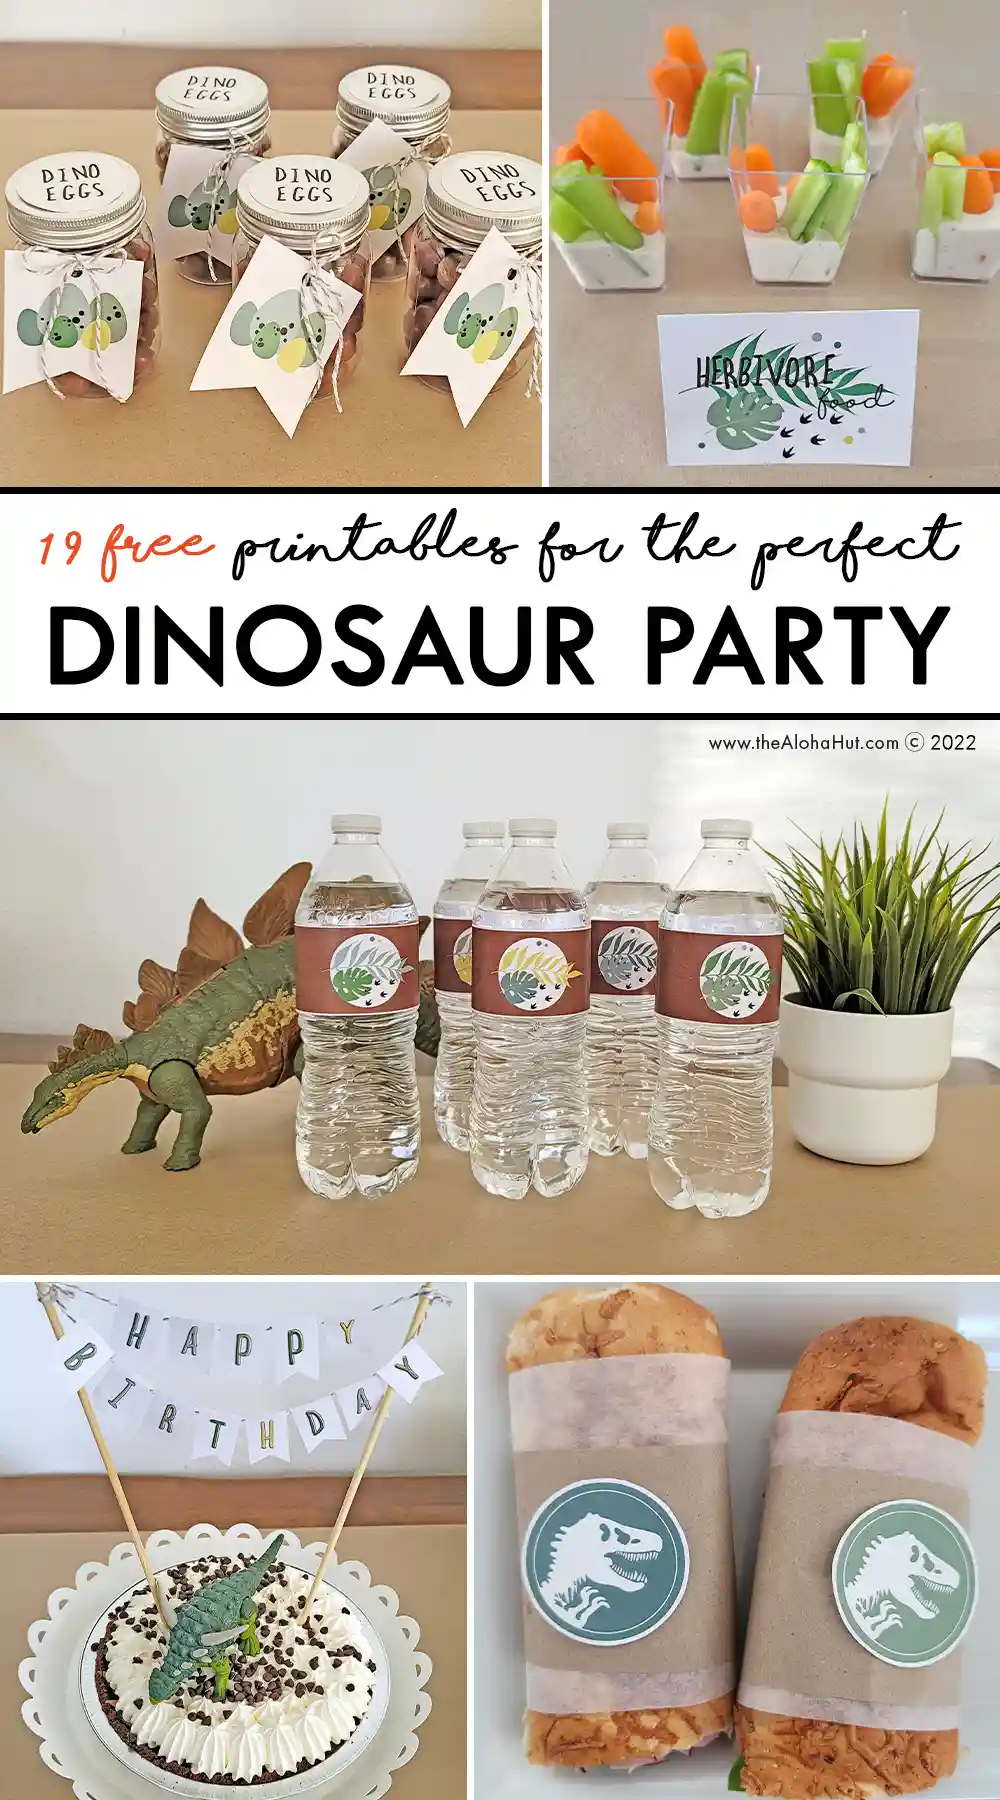 Jurassic World Camp Cretaceous Party Ideas - Dinosaur Party Ideas - free printable party decor & games